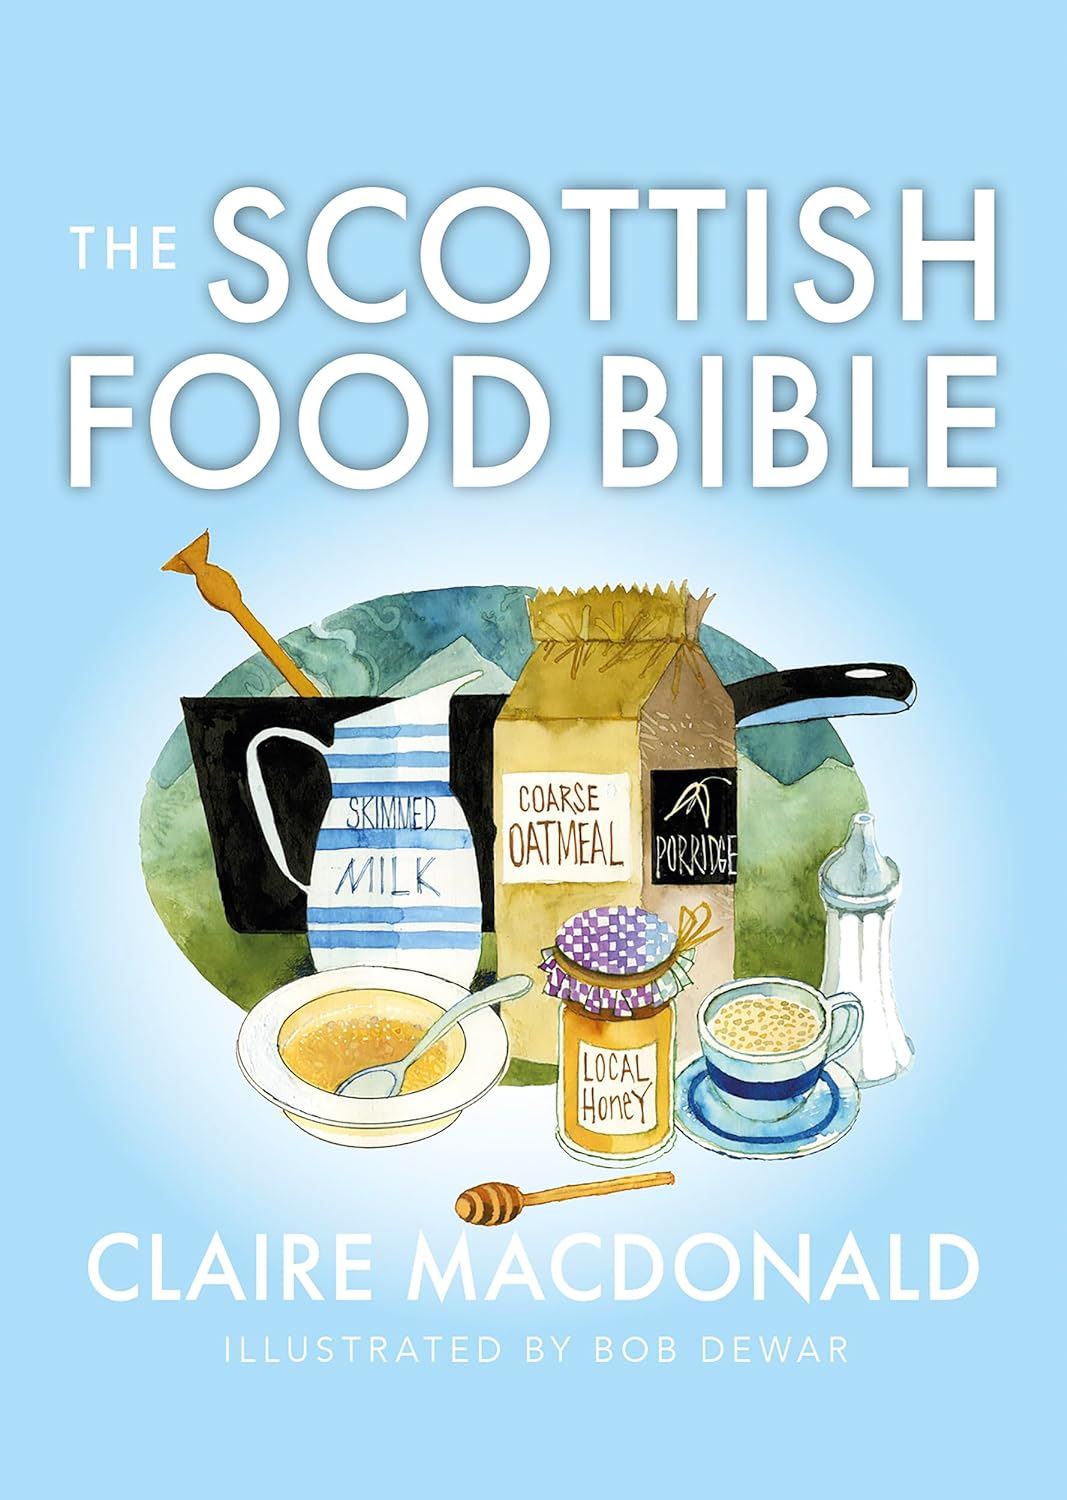 The Scottish Food Bible (New)